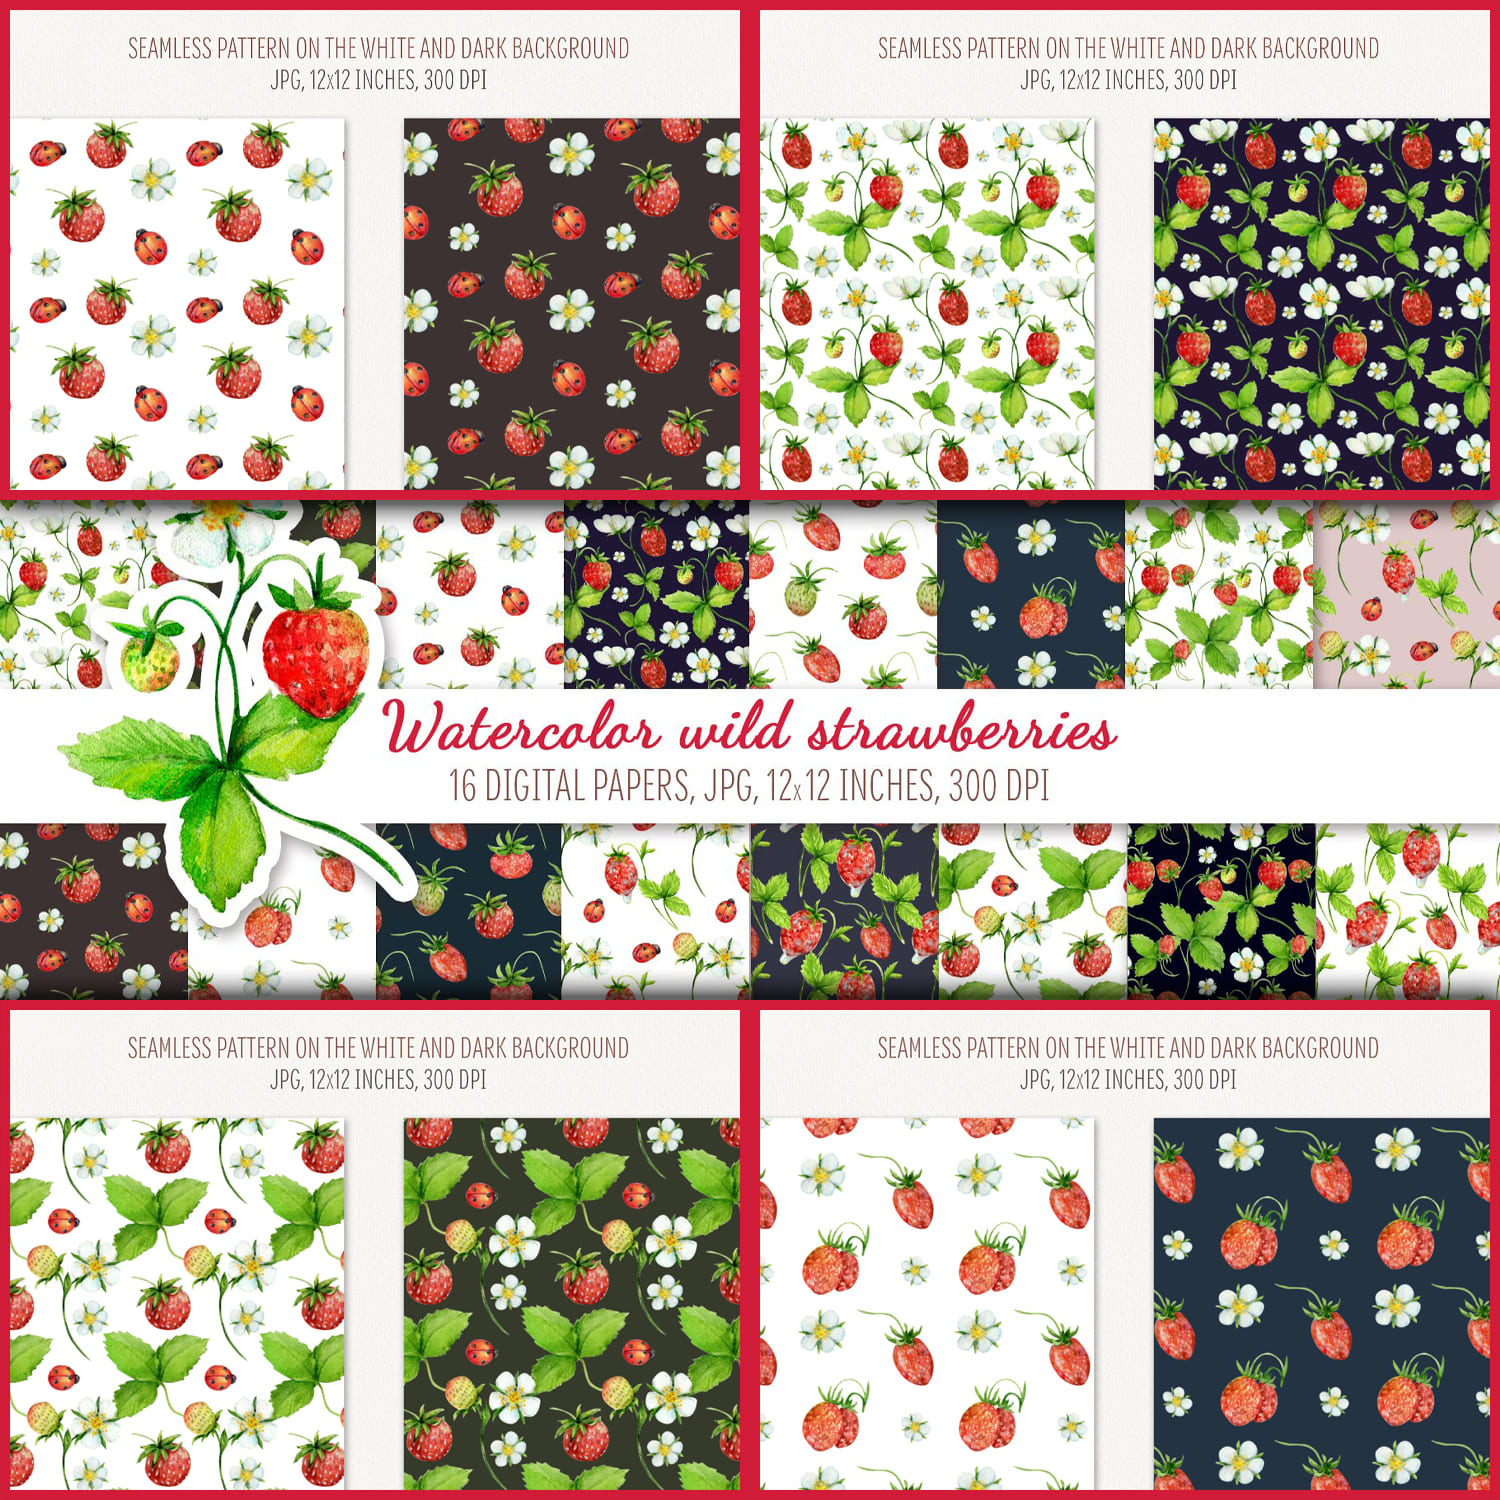 All slides of watercolor wild strawberries digital paper pack.